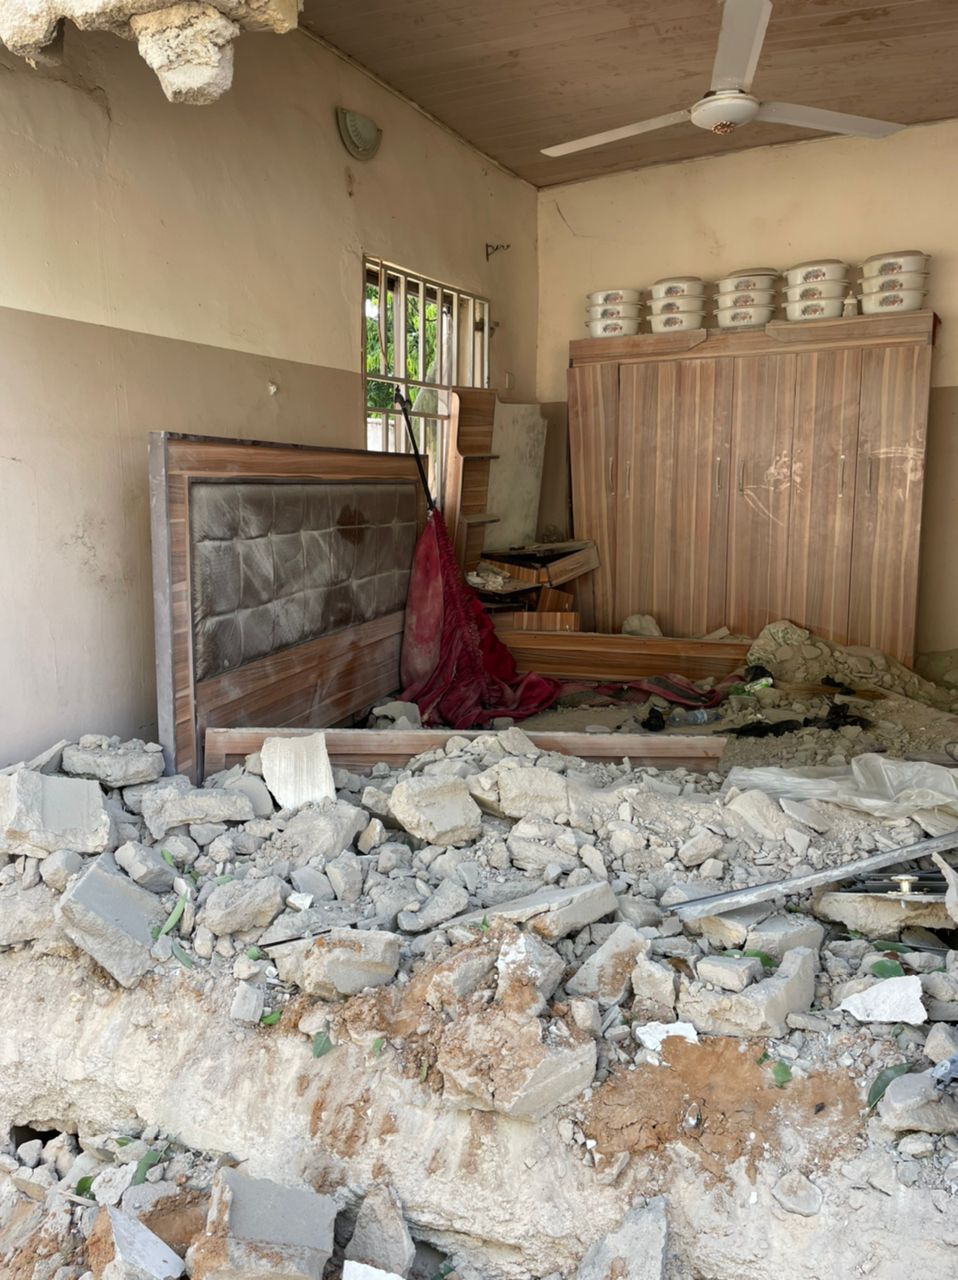 Just In: Multiple explosions rocked 1000 housing estate Maiduguri